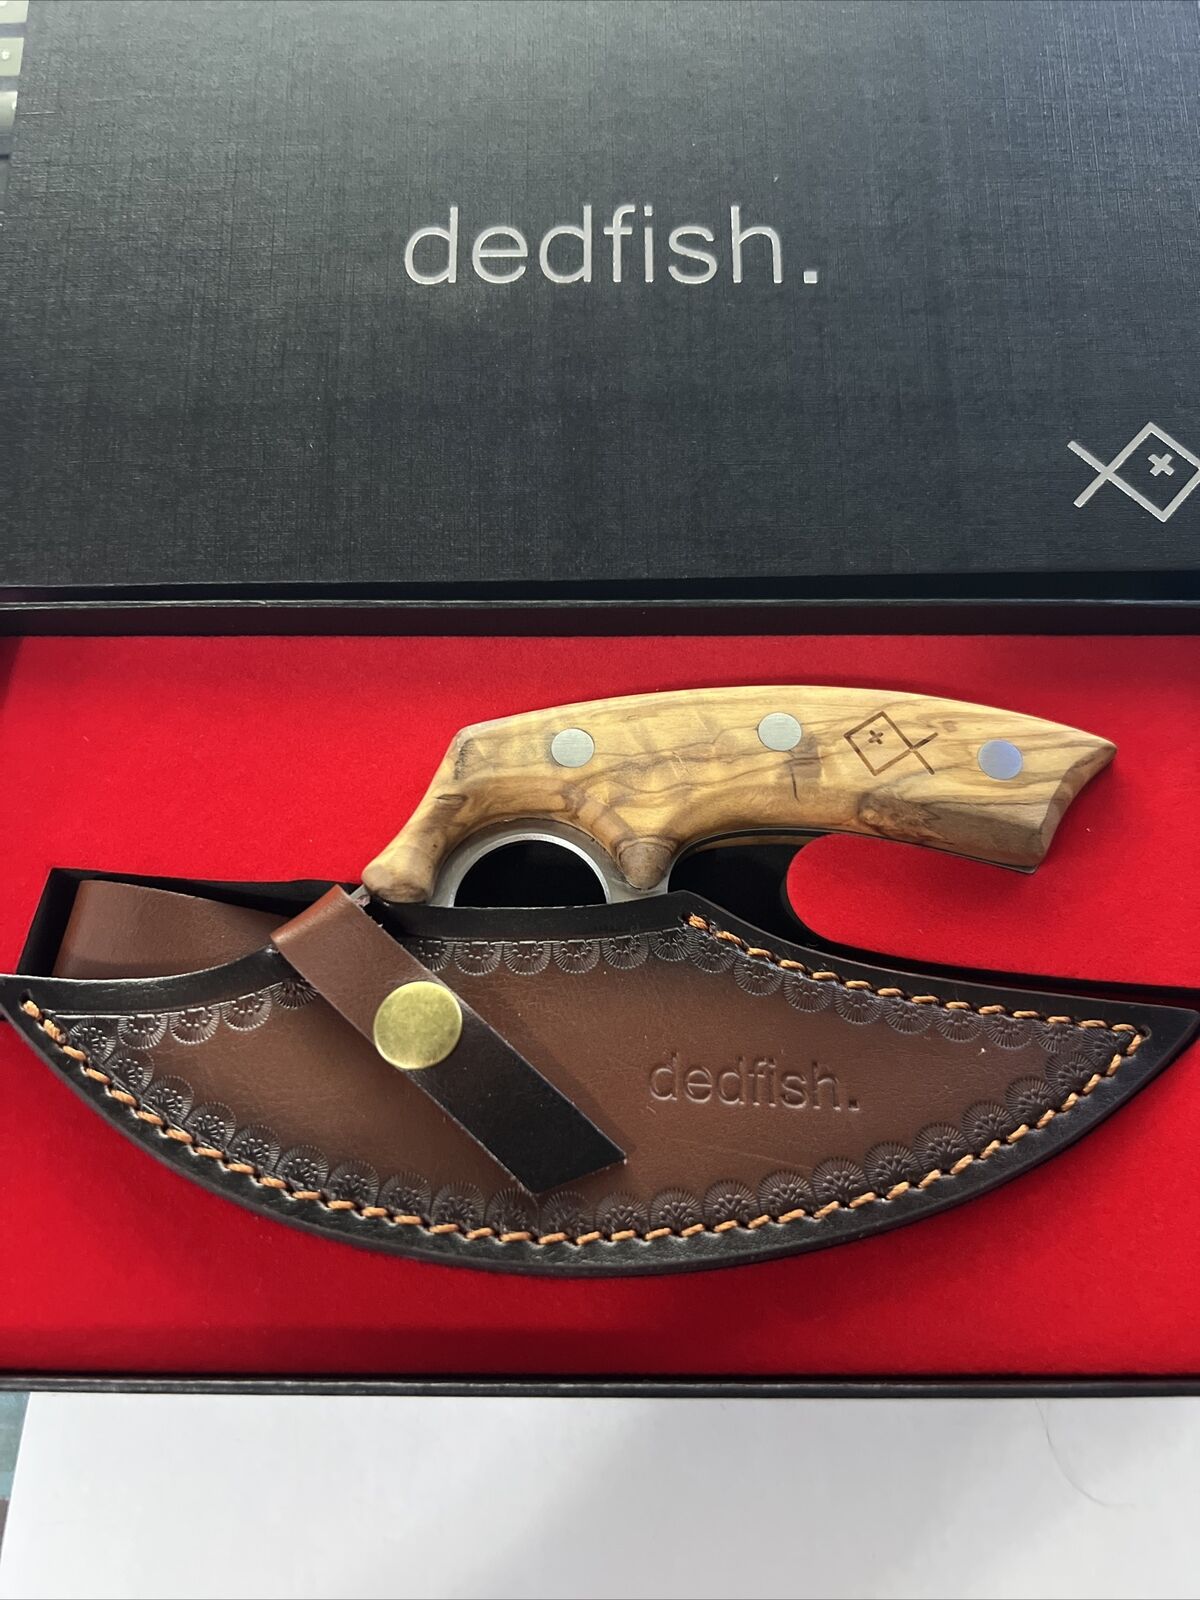 Dedfish ULU Multipurpose Knife Stainless Steel Blade Leather Sheath Pizza Cutter